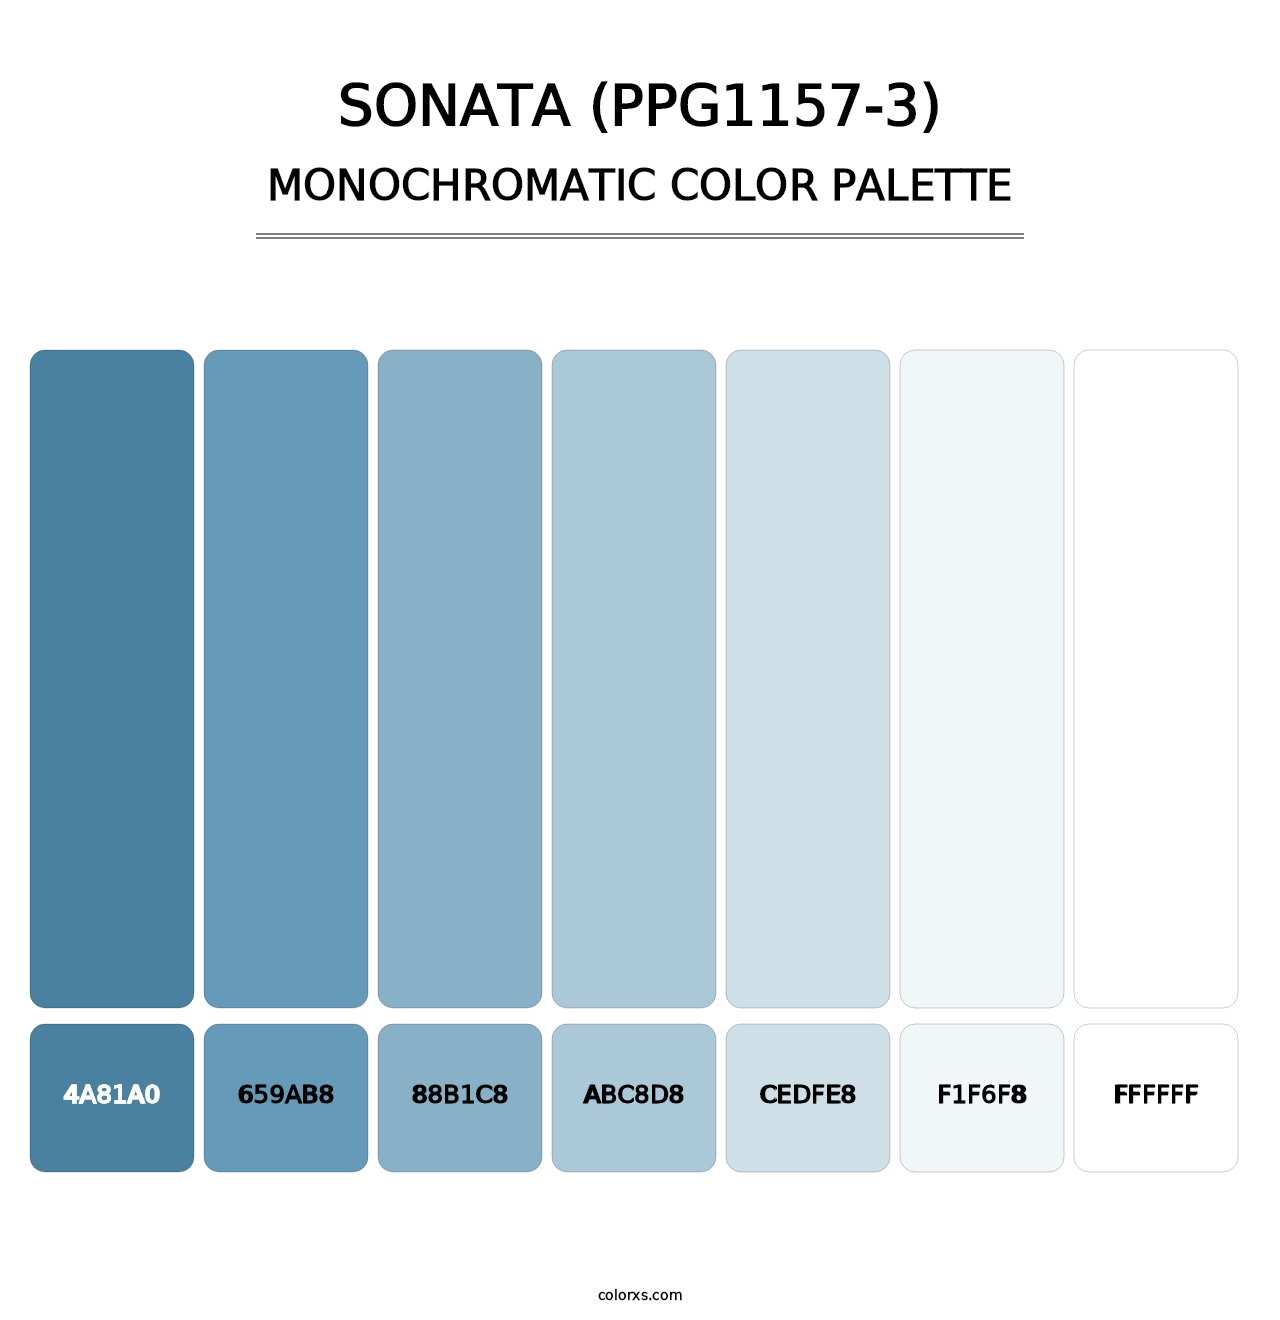 Sonata (PPG1157-3) - Monochromatic Color Palette